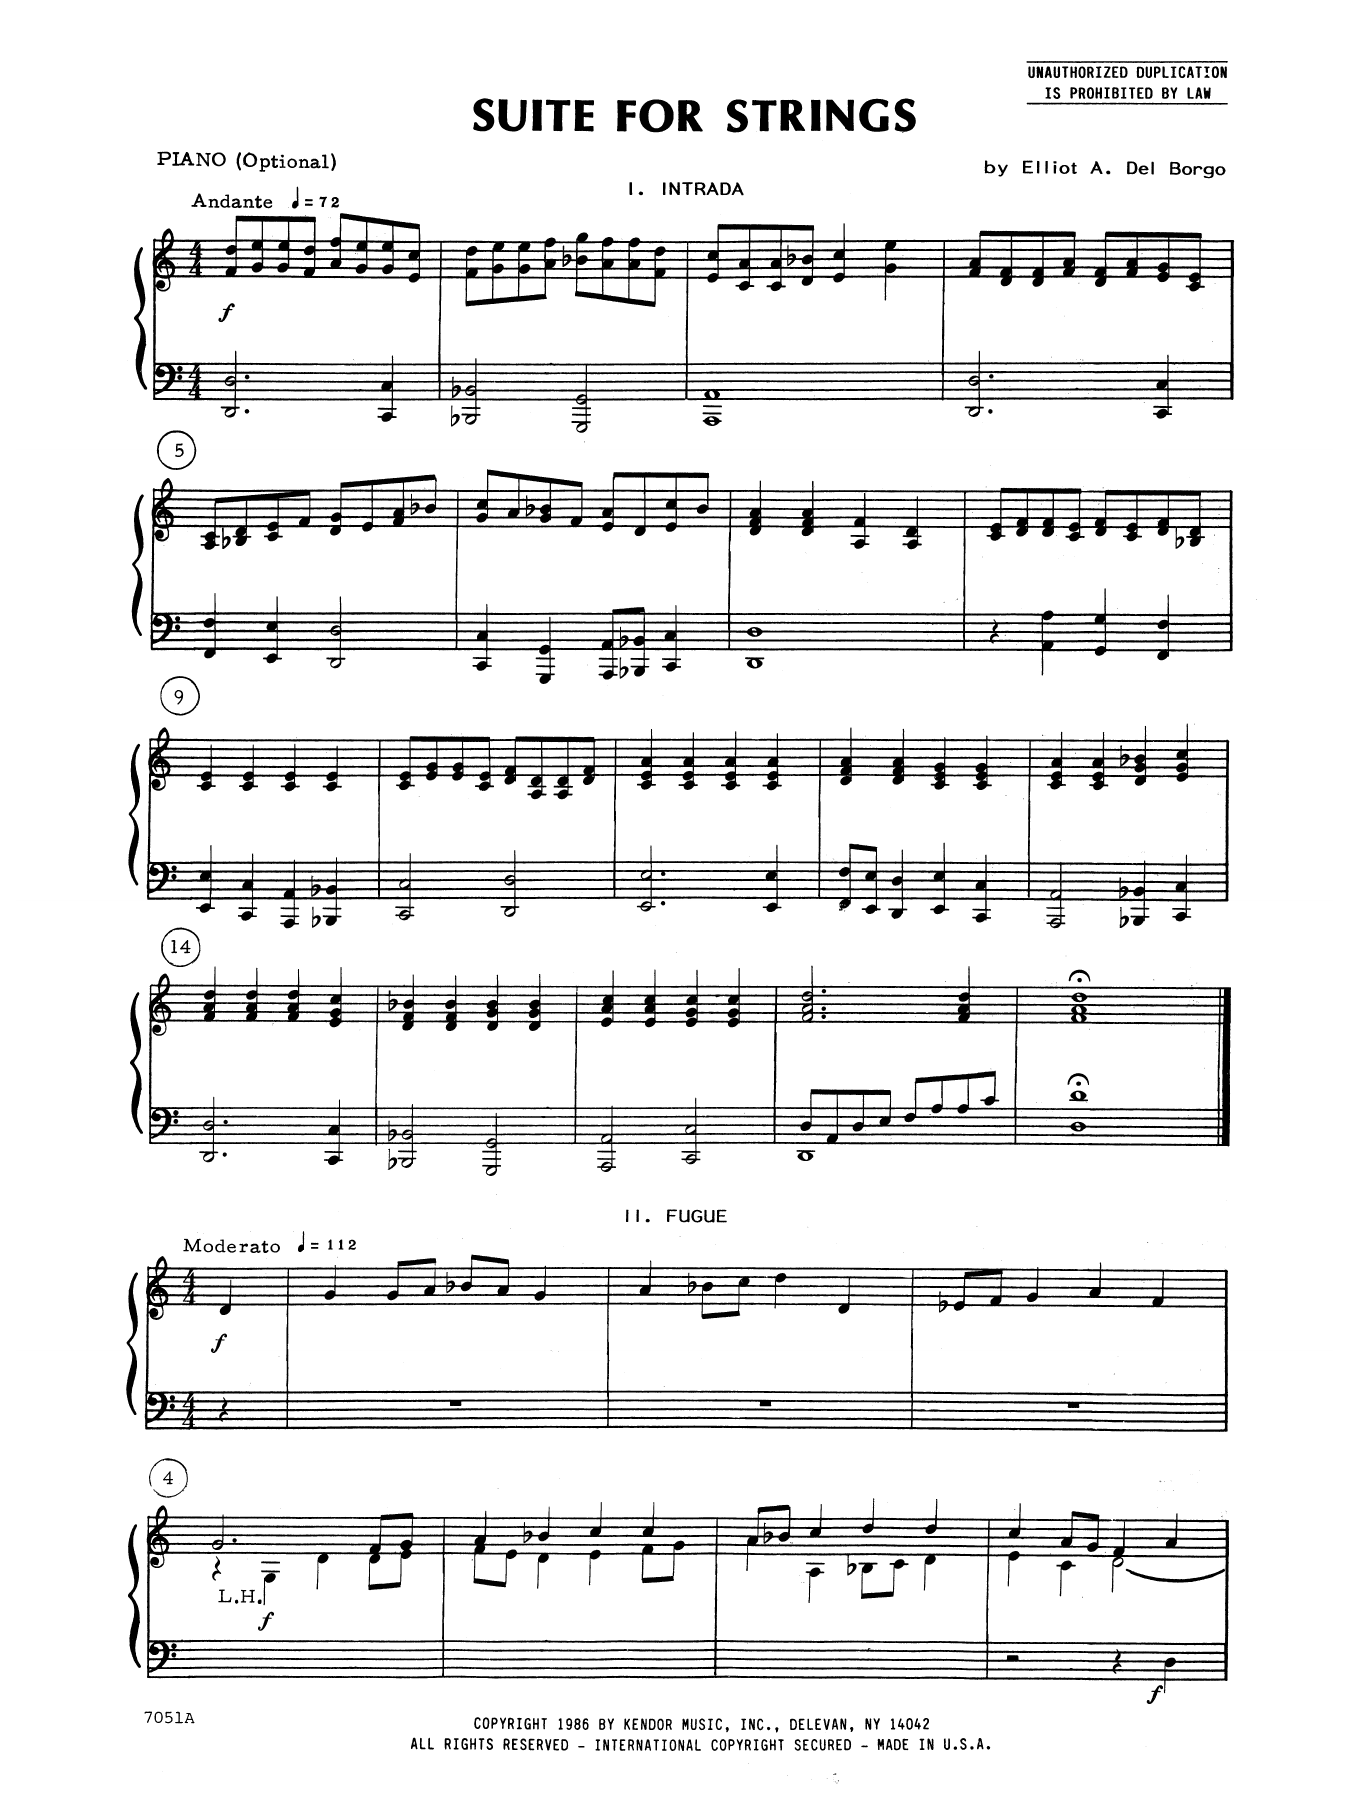 Download Elliot A. Del Borgo Suite for Strings - Piano Accompaniment Sheet Music